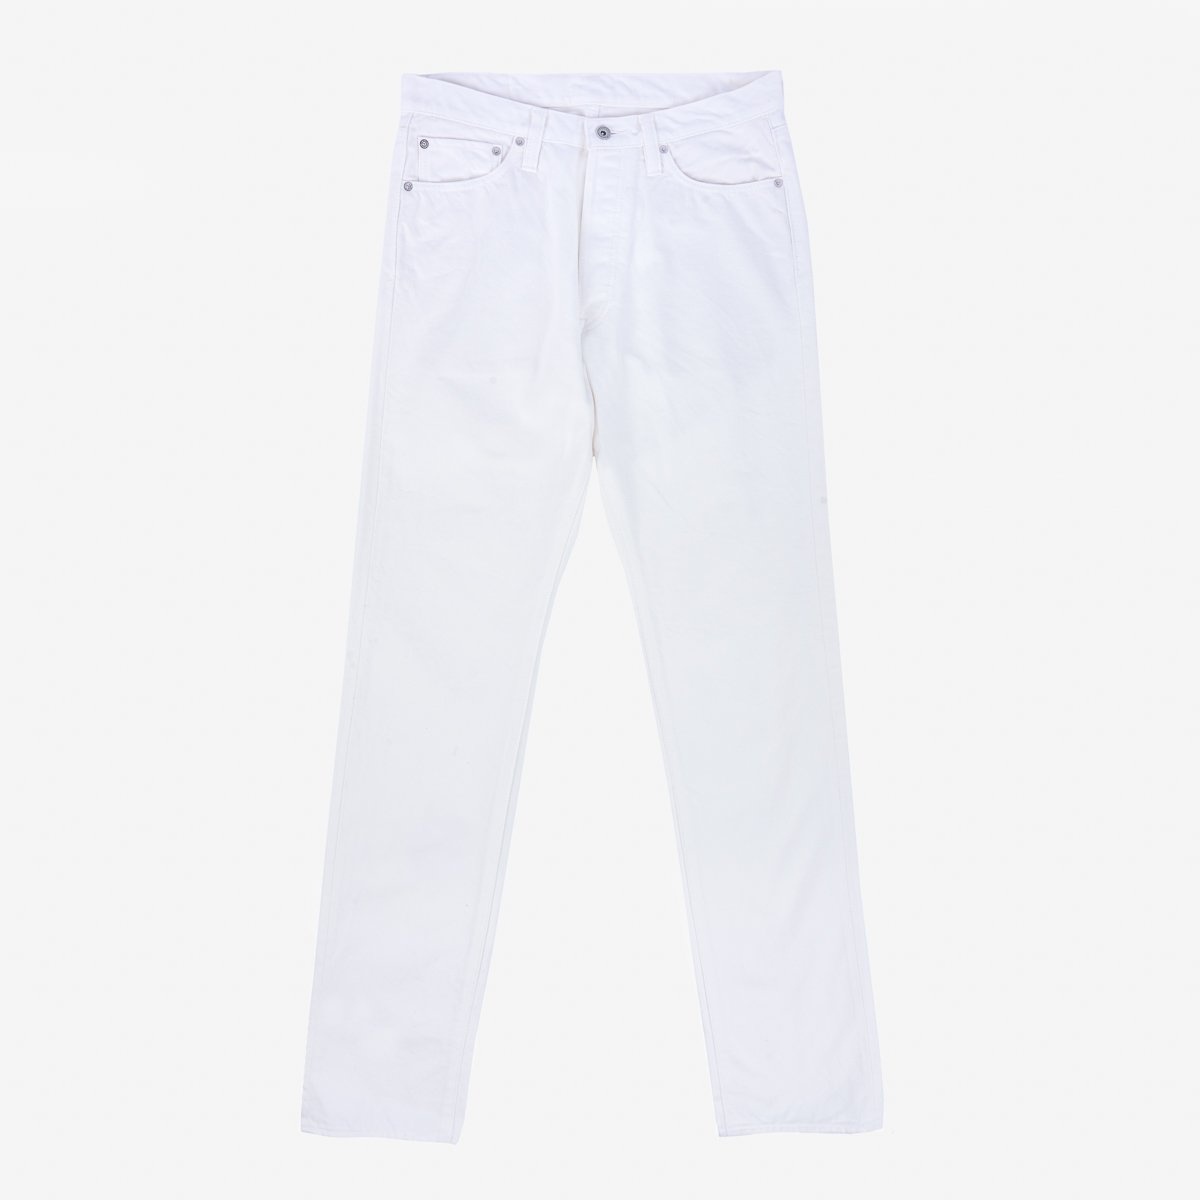 IH-888-WT 13.5oz Denim Medium/High Rise Tapered Cut Jeans - White - 1